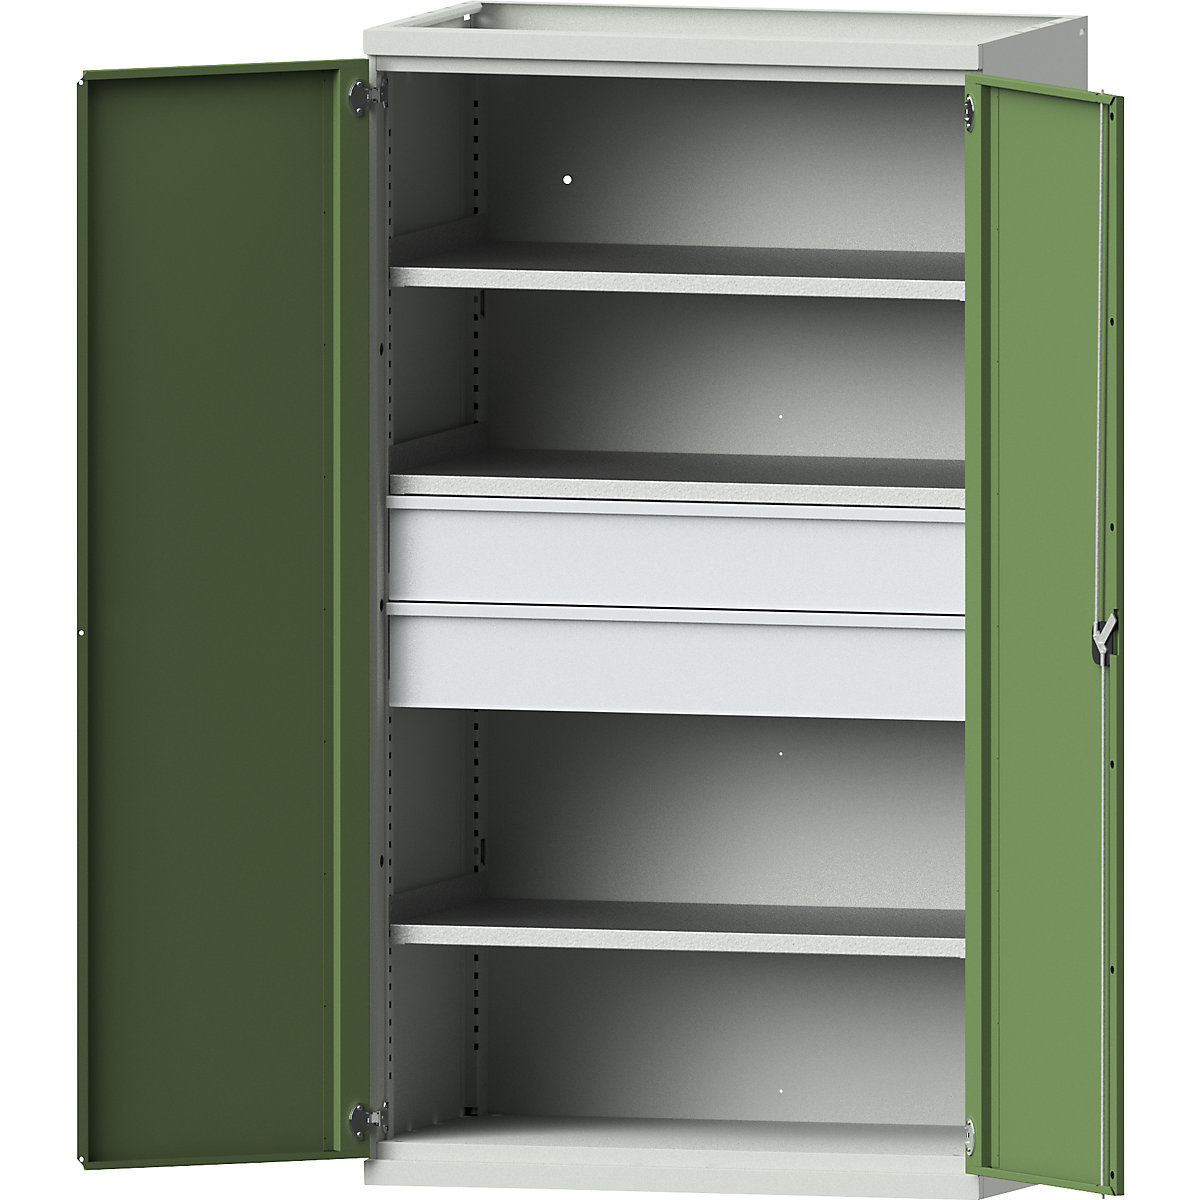 Heavy duty cupboard made of steel – eurokraft pro, 3 shelves, 2 x 180 mm high drawers, light grey / reseda green-2